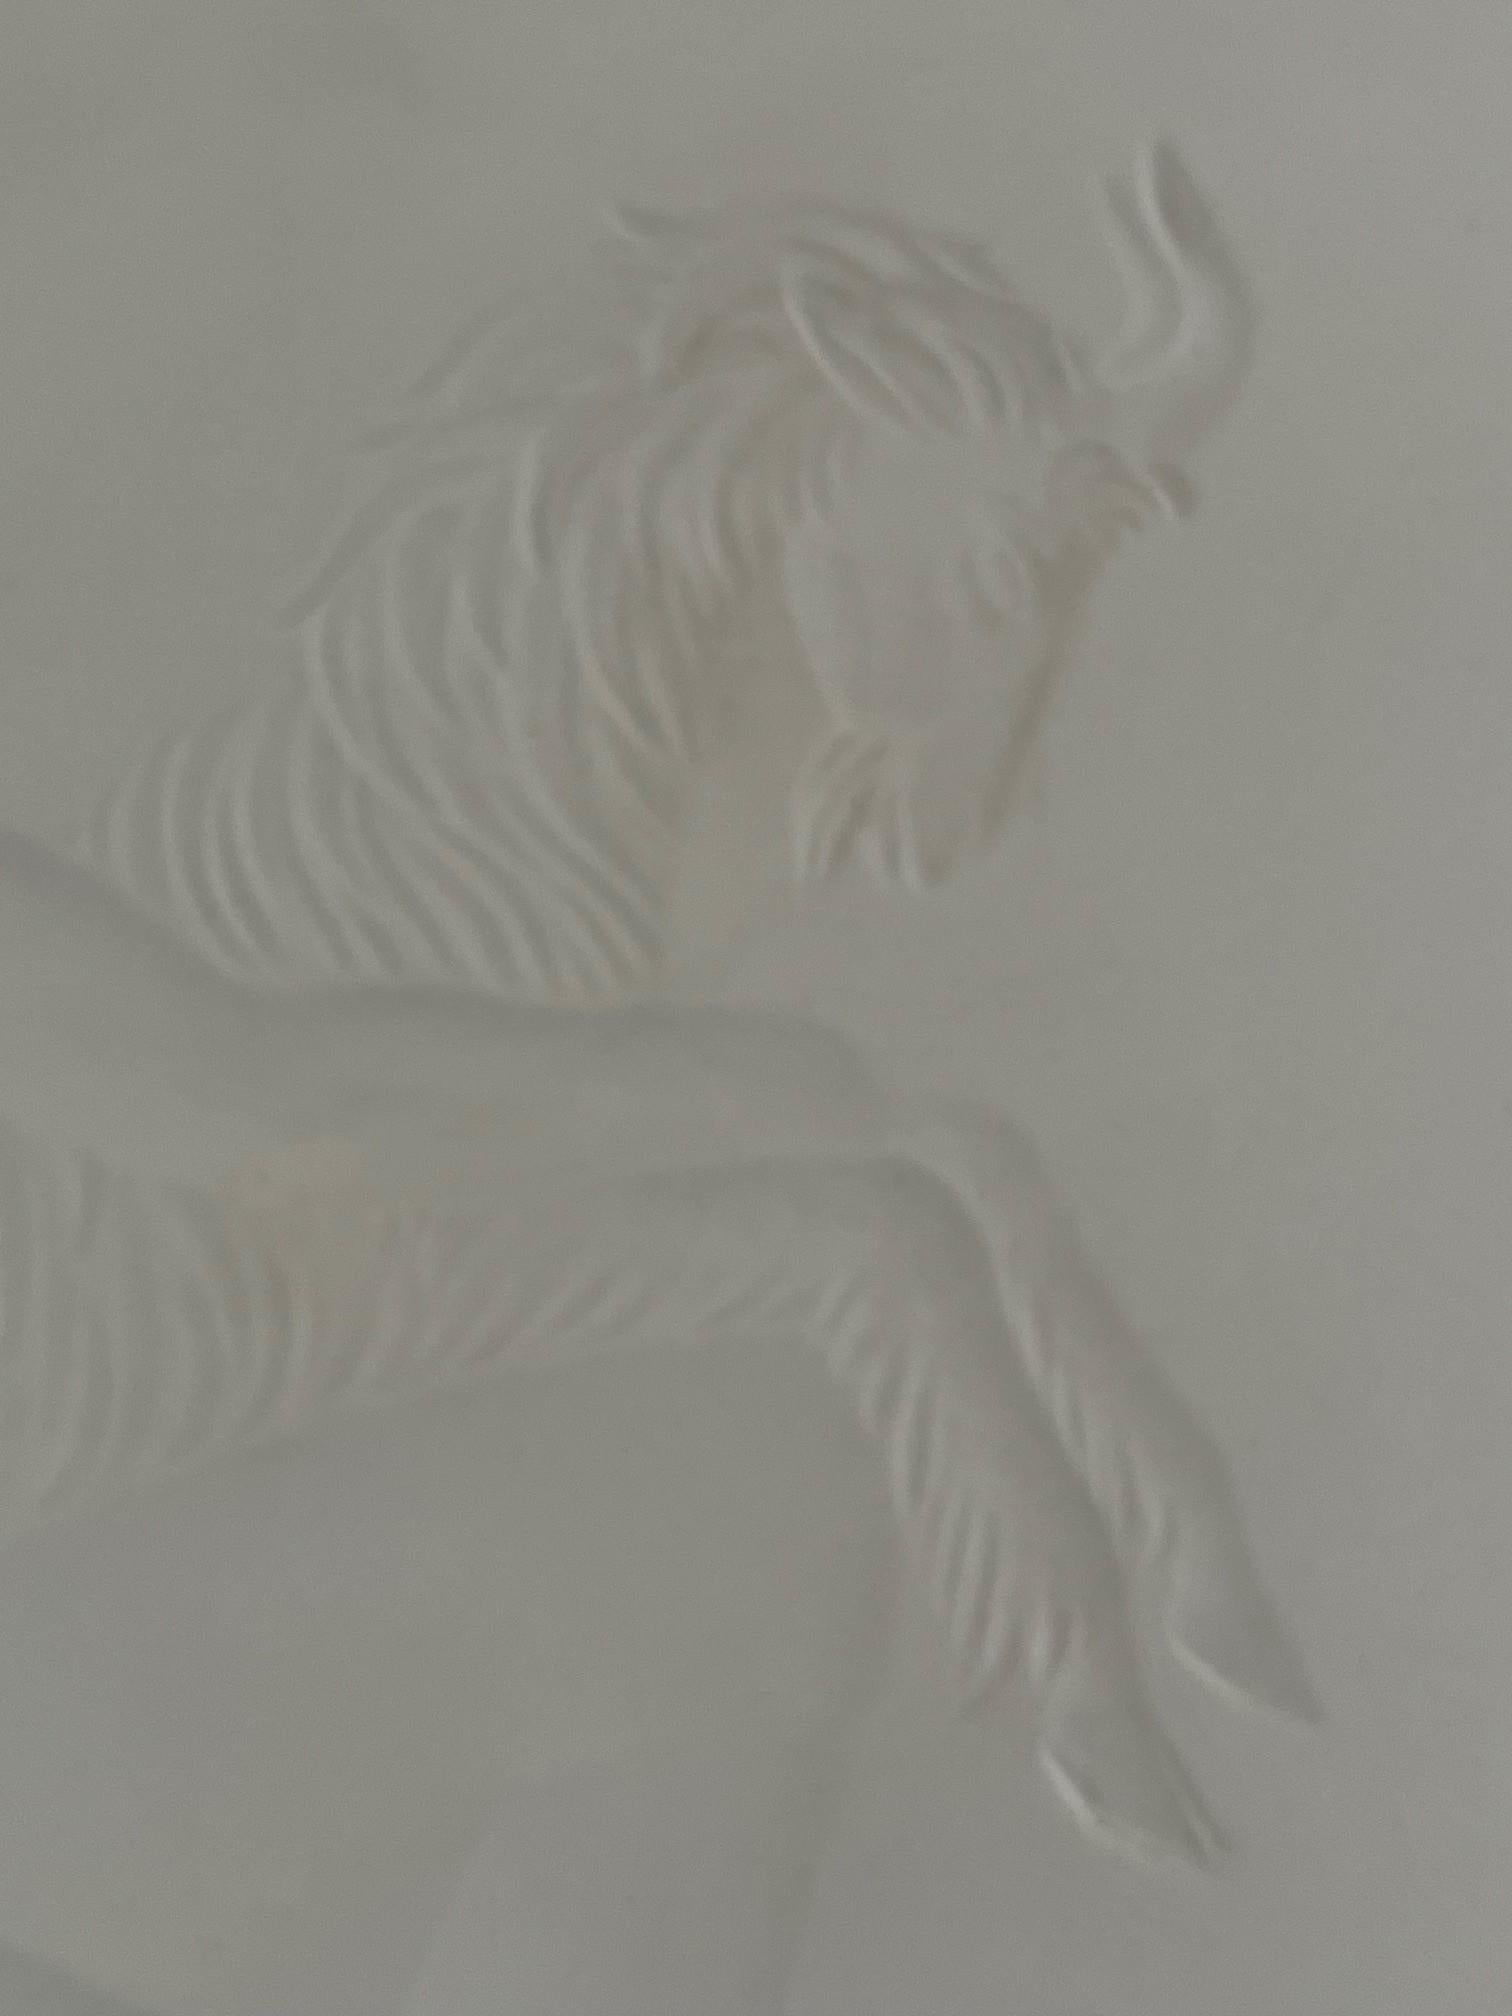 Vintage Exquisite Art Deco White Ceramic Vase by Rena Rosenthal For Sale 2